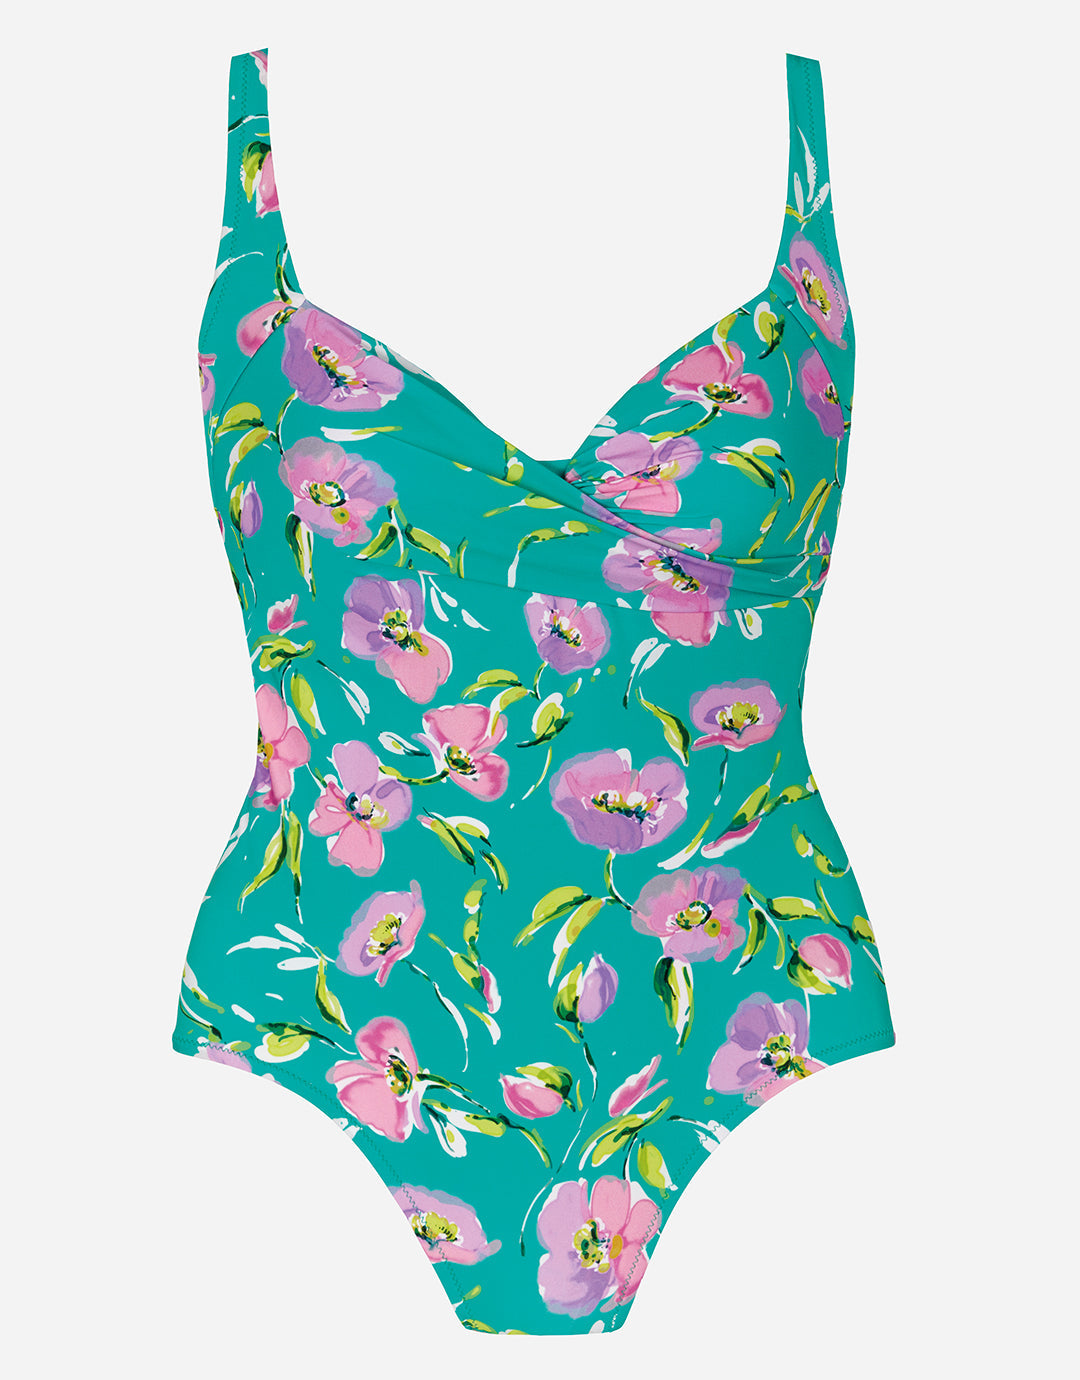 Blume Wrap Front Swimsuit - Mint Floral - Simply Beach UK